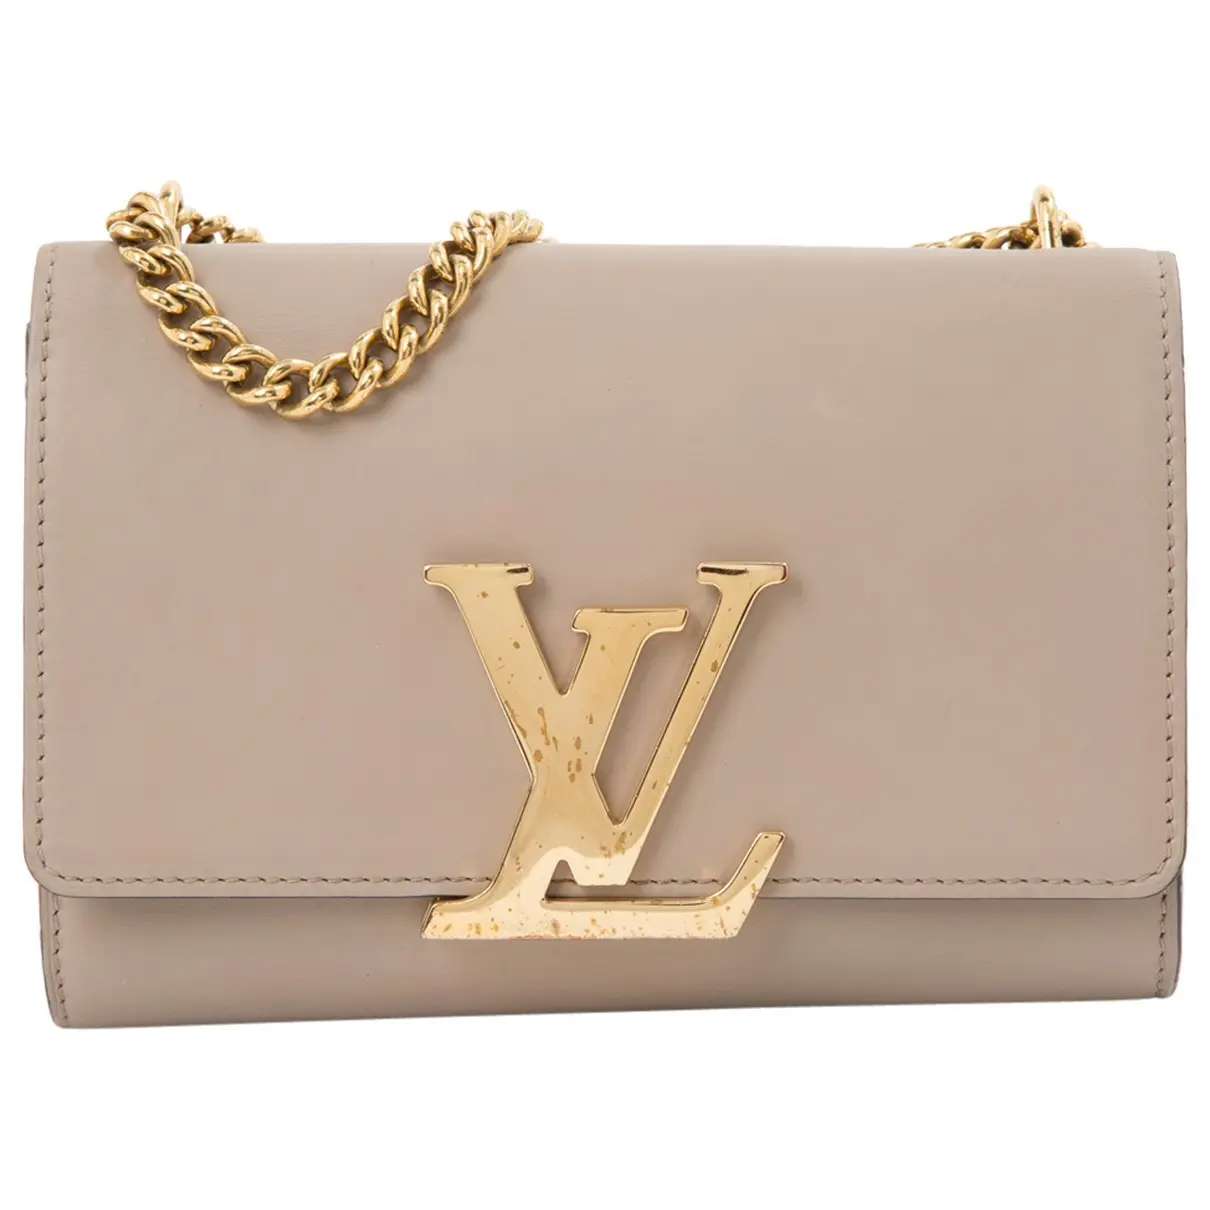 Louise leather handbag Louis Vuitton